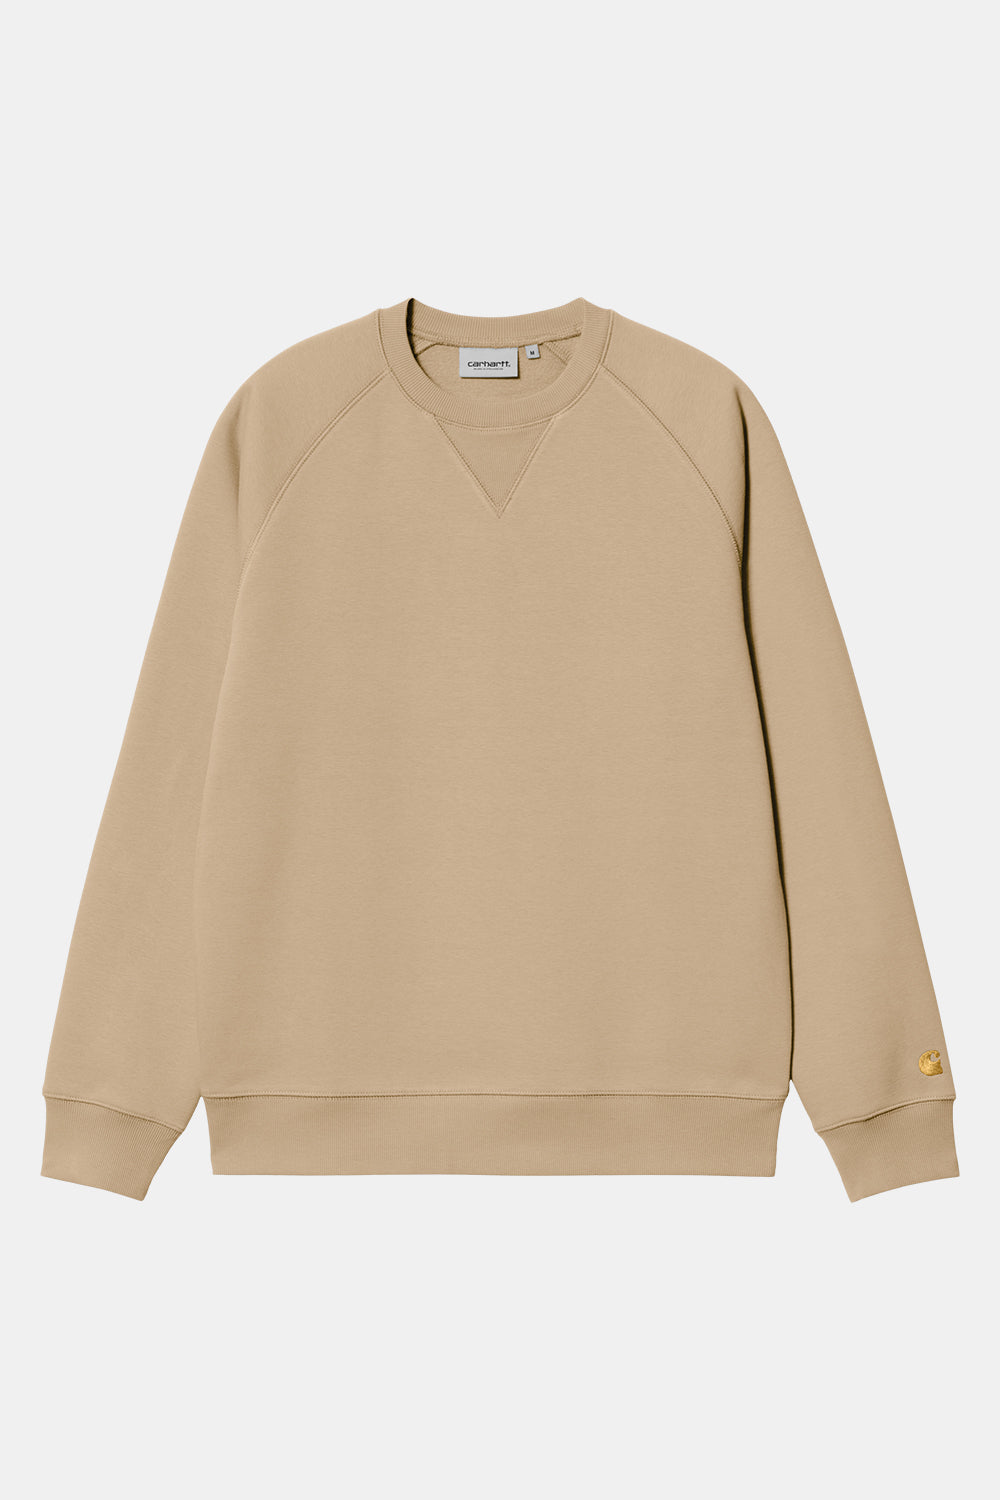 Carhartt WIP Chase Sweatshirt (Sable/Gold)